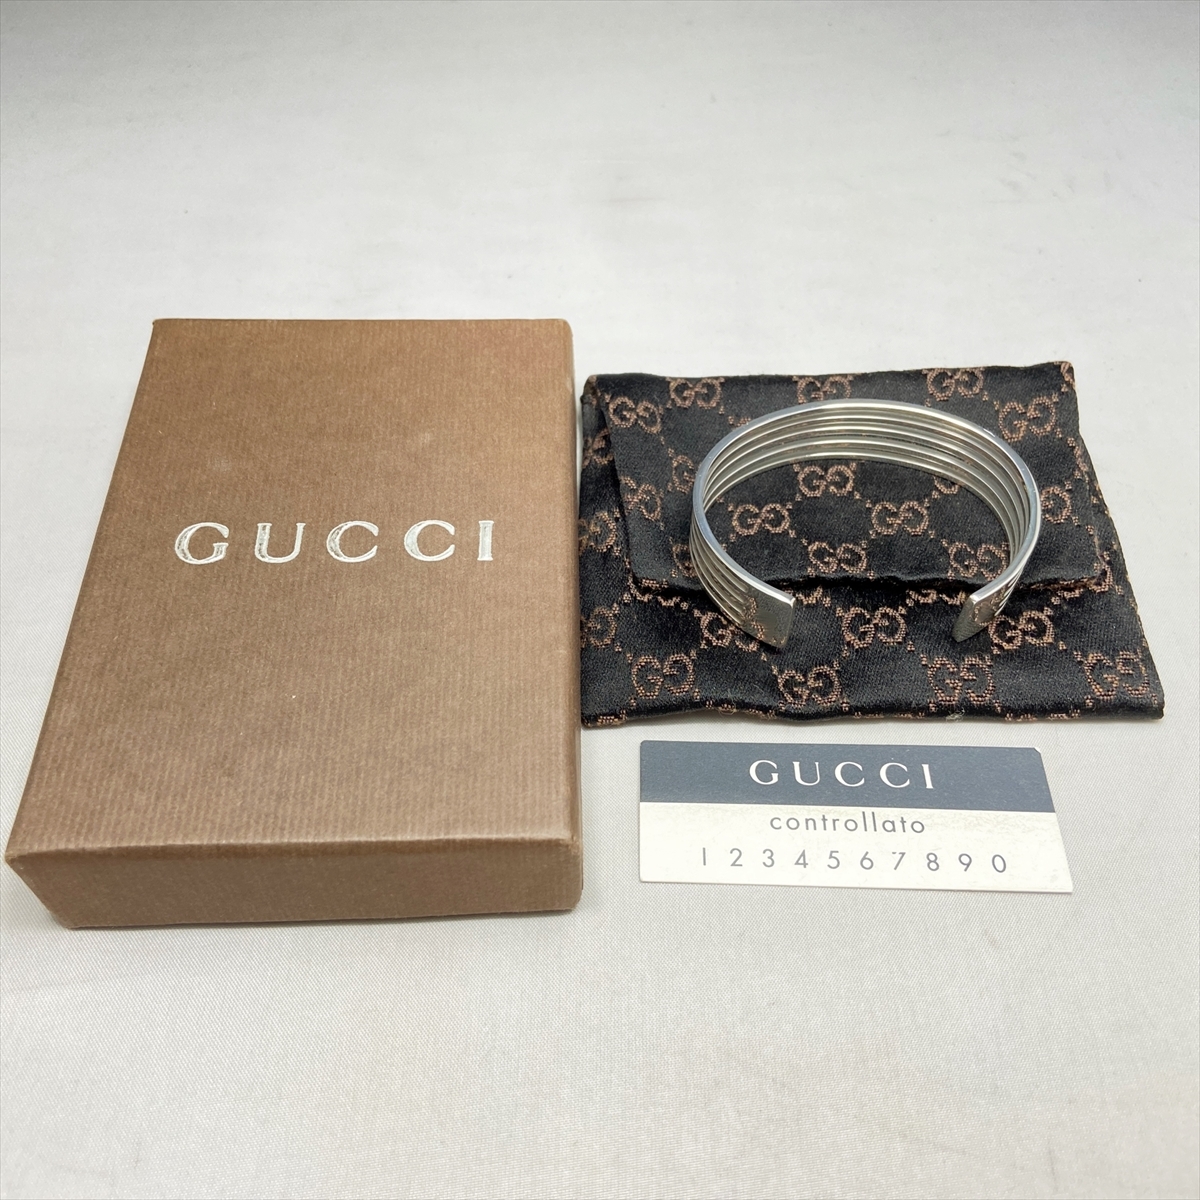  new goods finish rare records out of production Gucci GUCCI square stripe bangle bracele silver 925